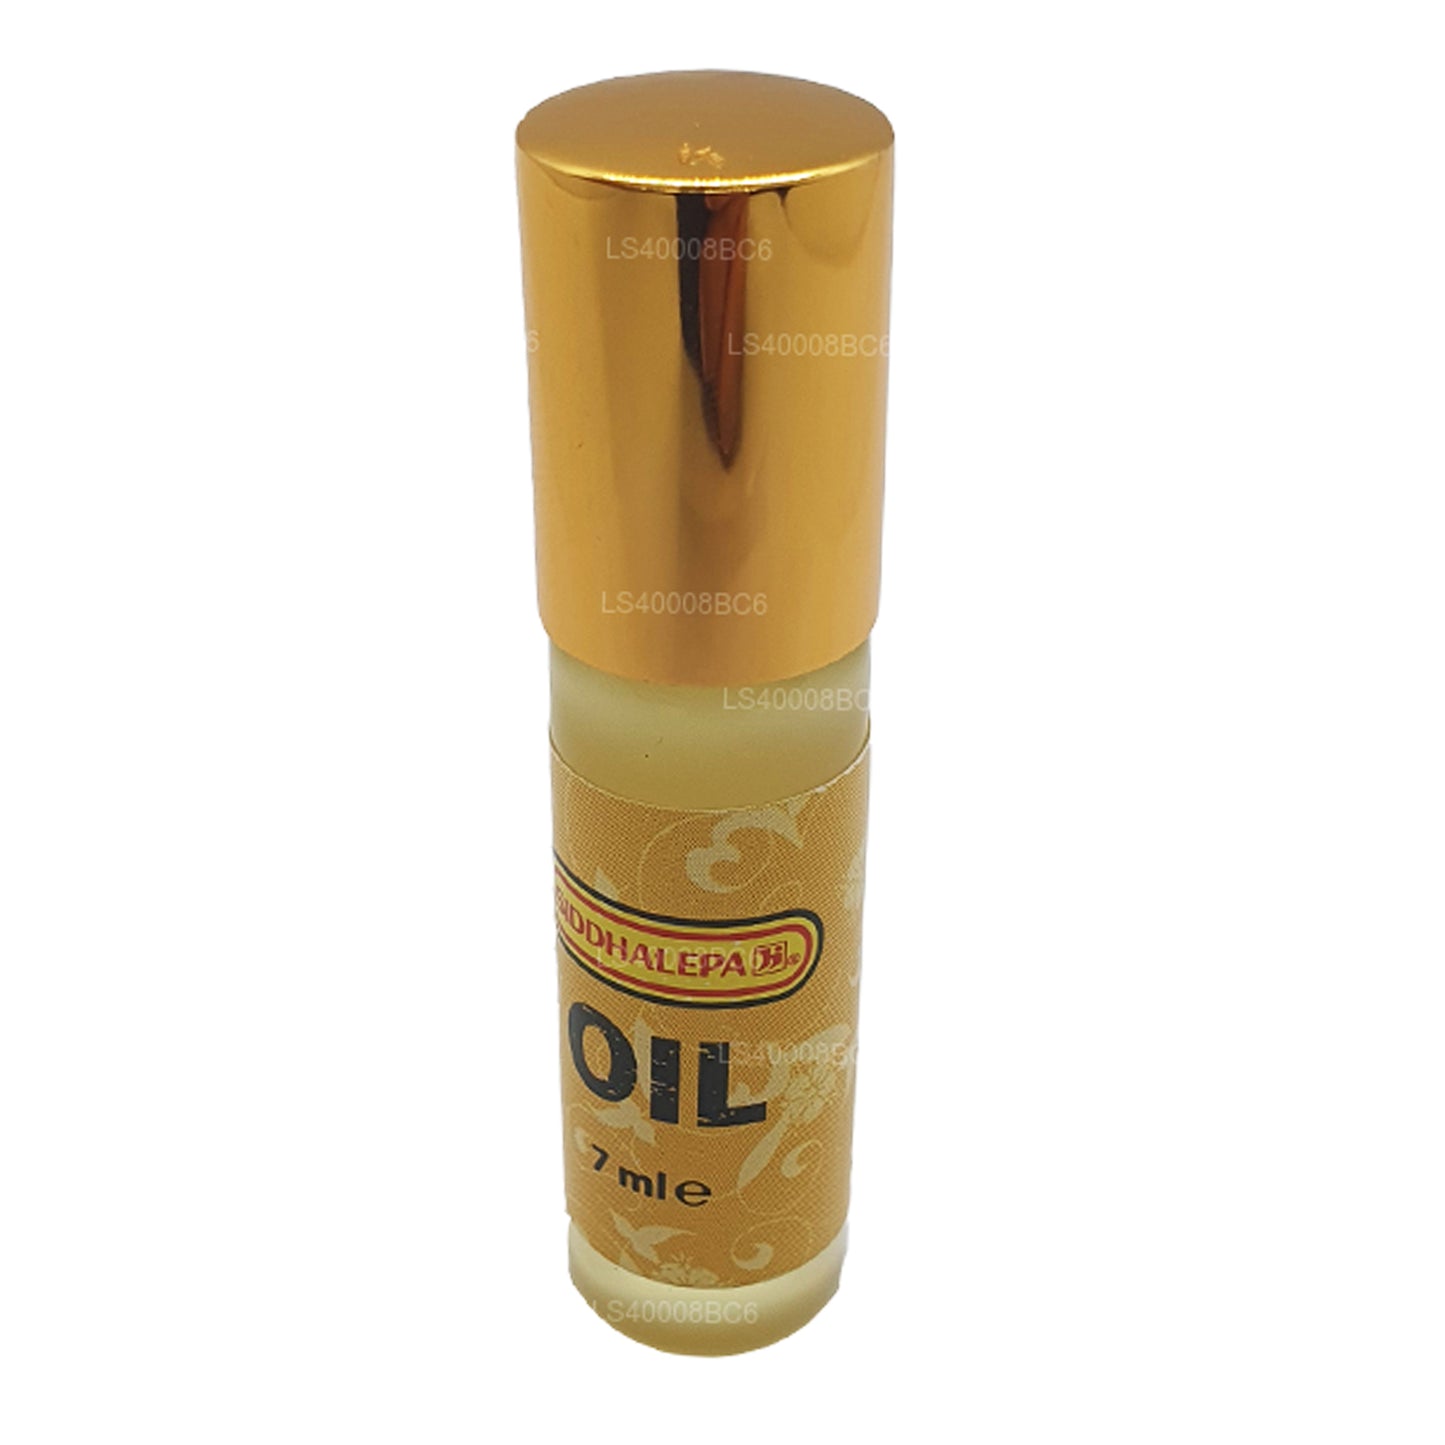 Siddhalepa 油 (7ml)